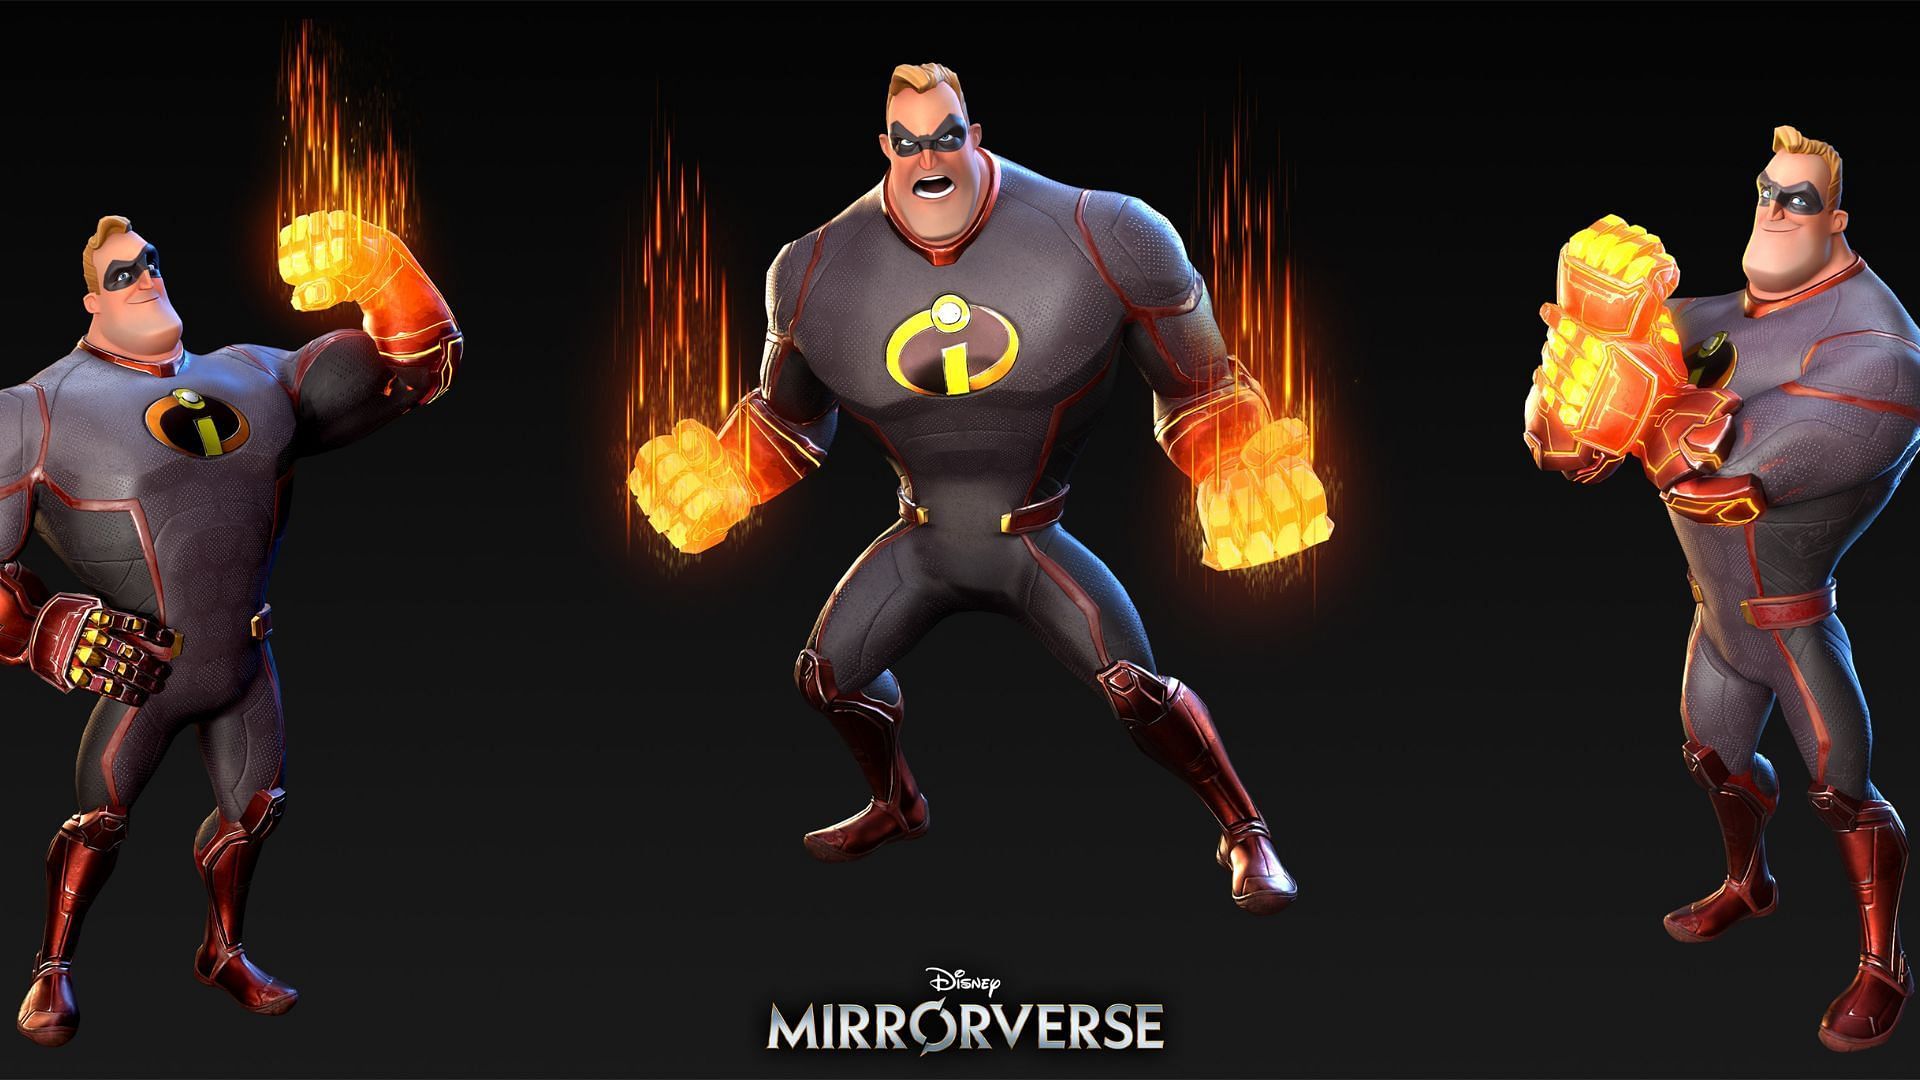 Mr. Incredible in Disney Mirrorverse. (Image via Disney)